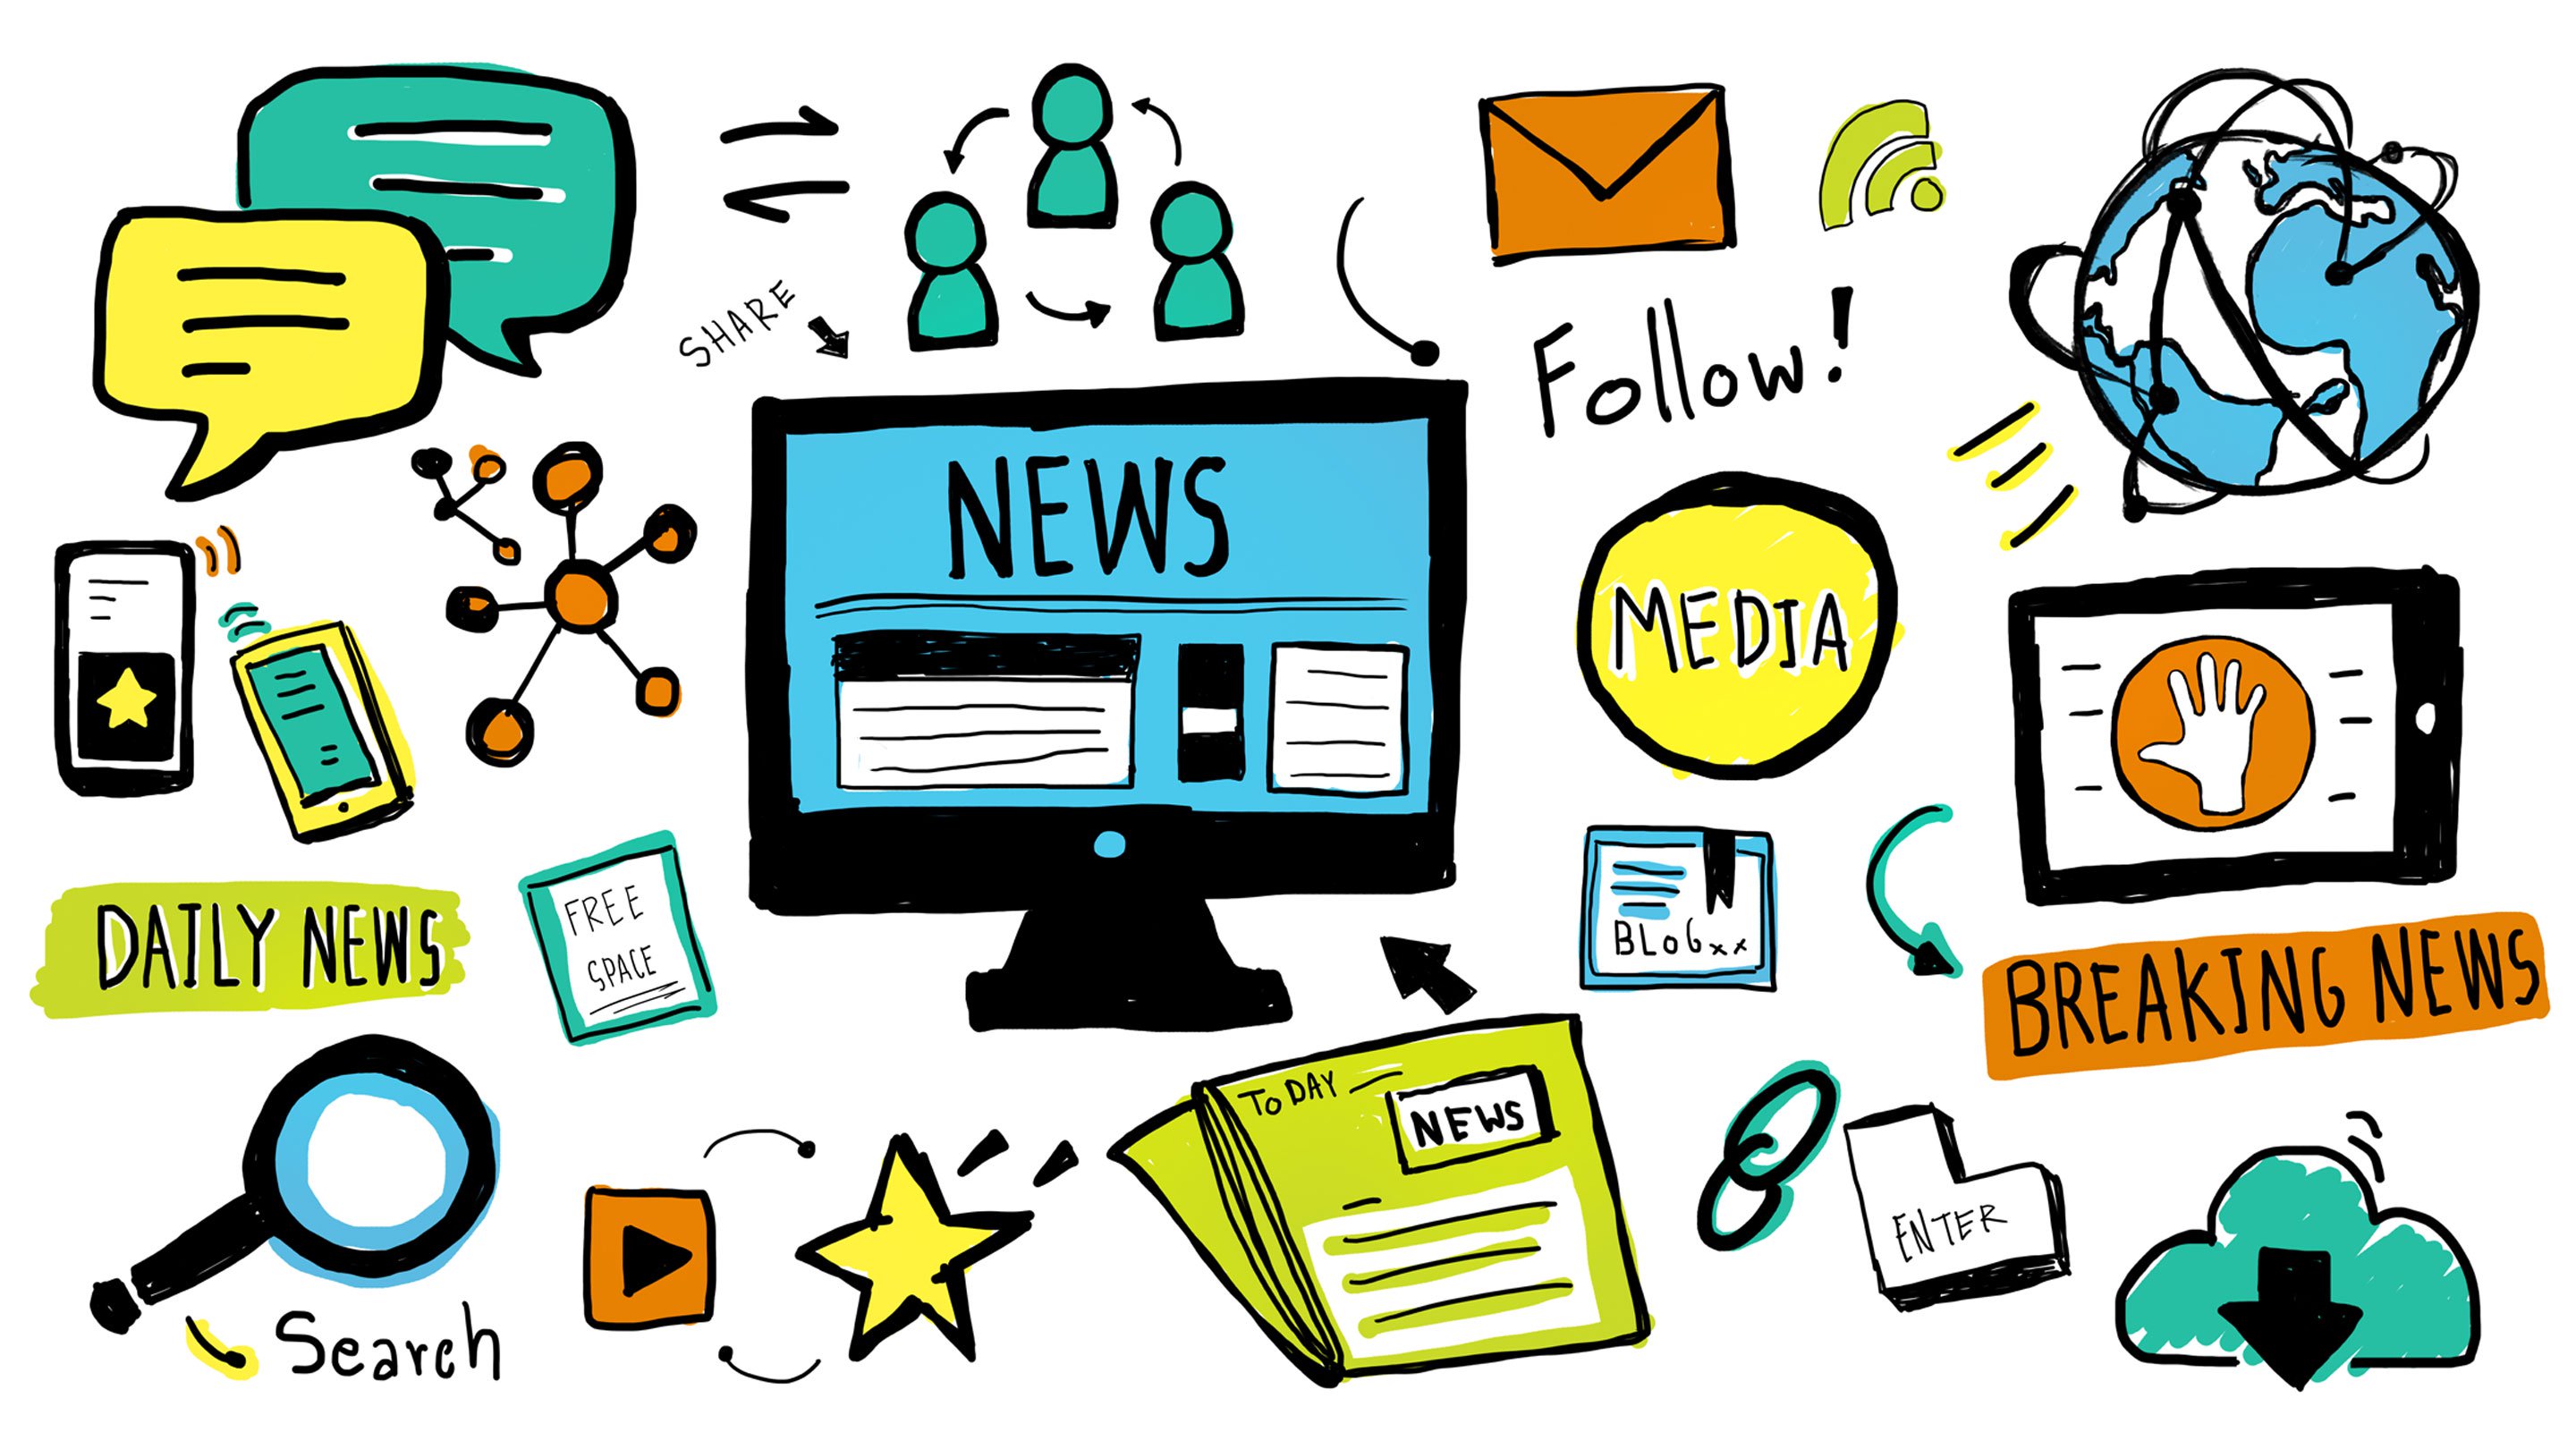 How to Spot Fake News: 6 Media Literacy Tips